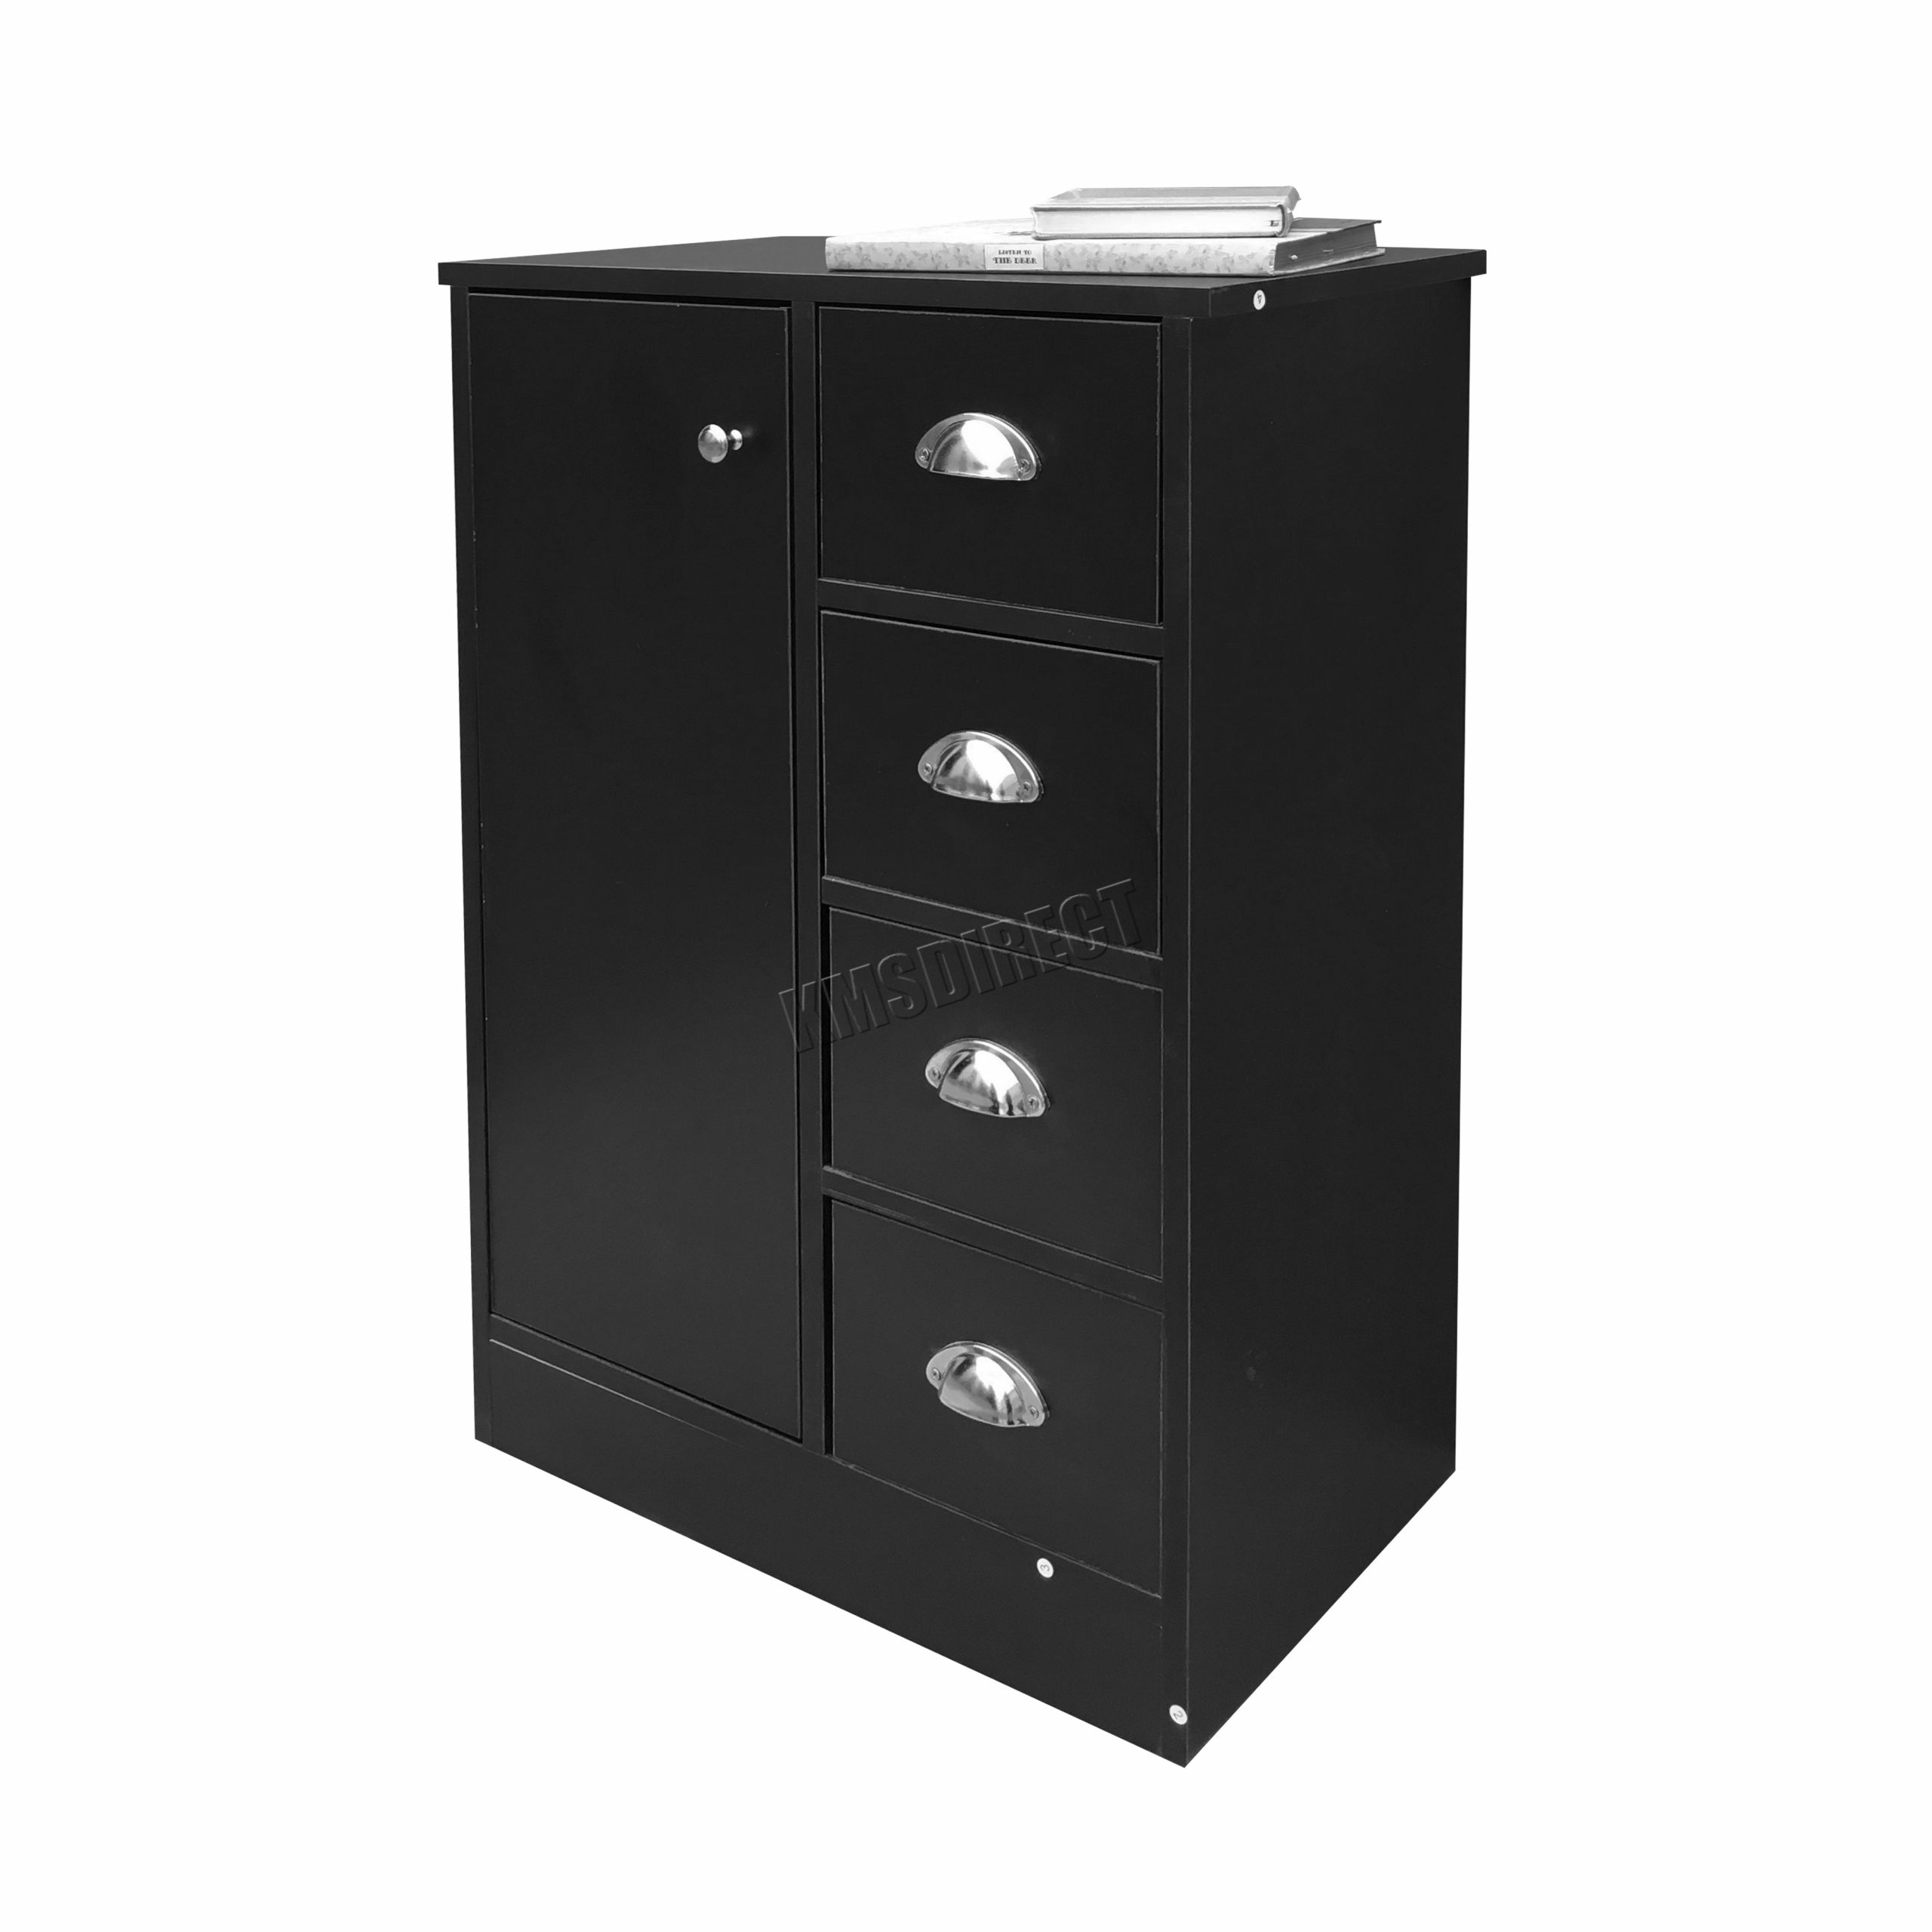 Black Bathroom Storage Cabinet
 FoxHunter 4 Drawer 2 Shelves Bathroom Storage Cupboard